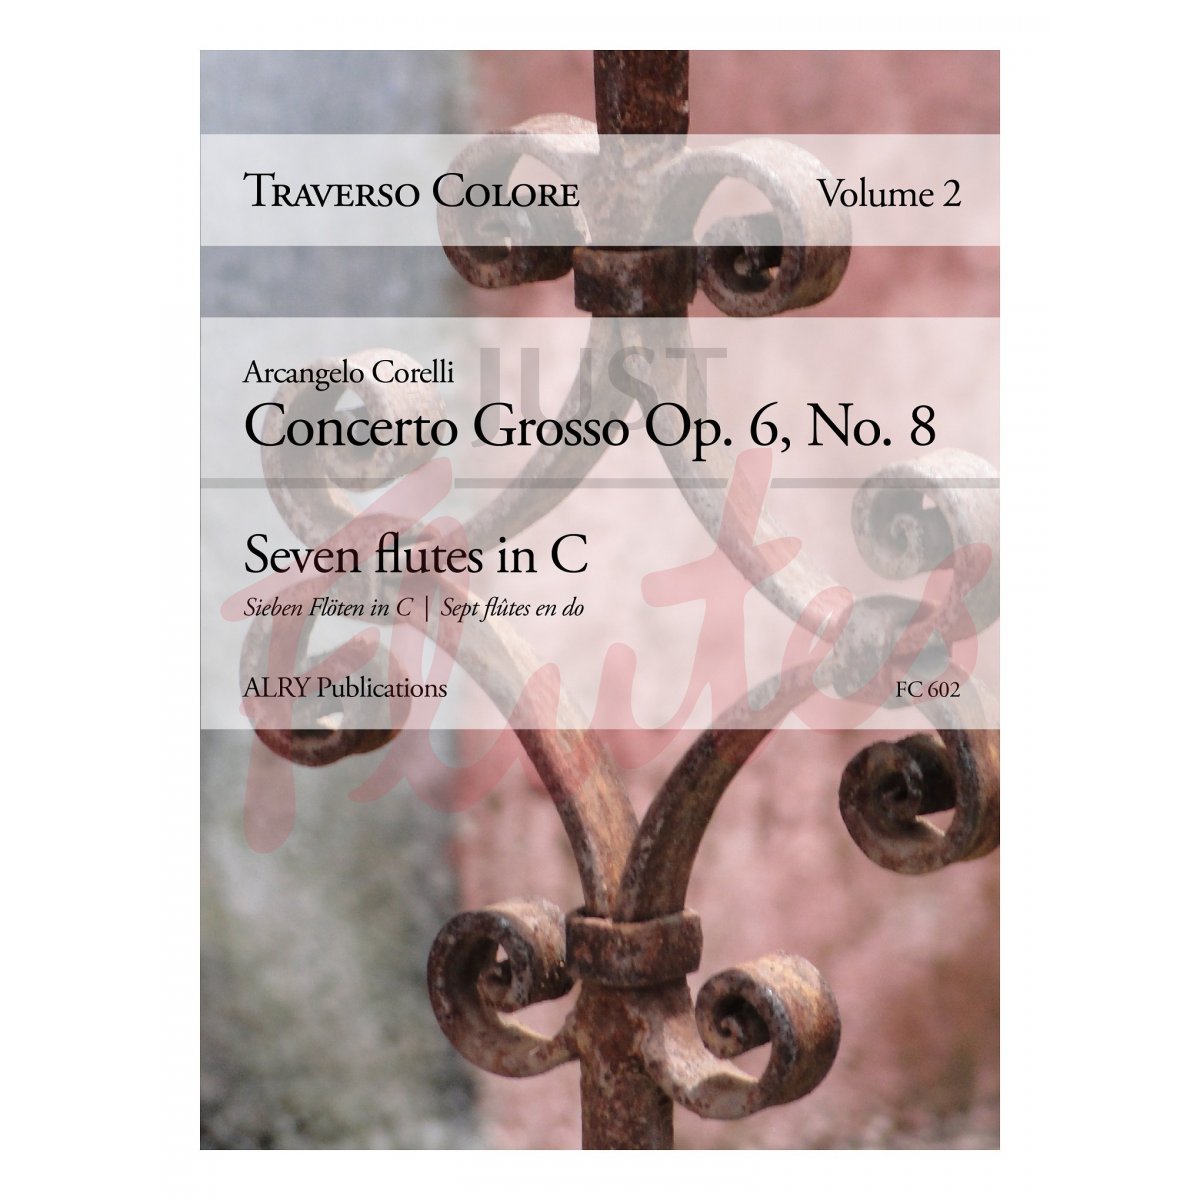 Traverso Colore, Volume 2 - Concerto Grosso Op. 6, No. 8 [Flutes]